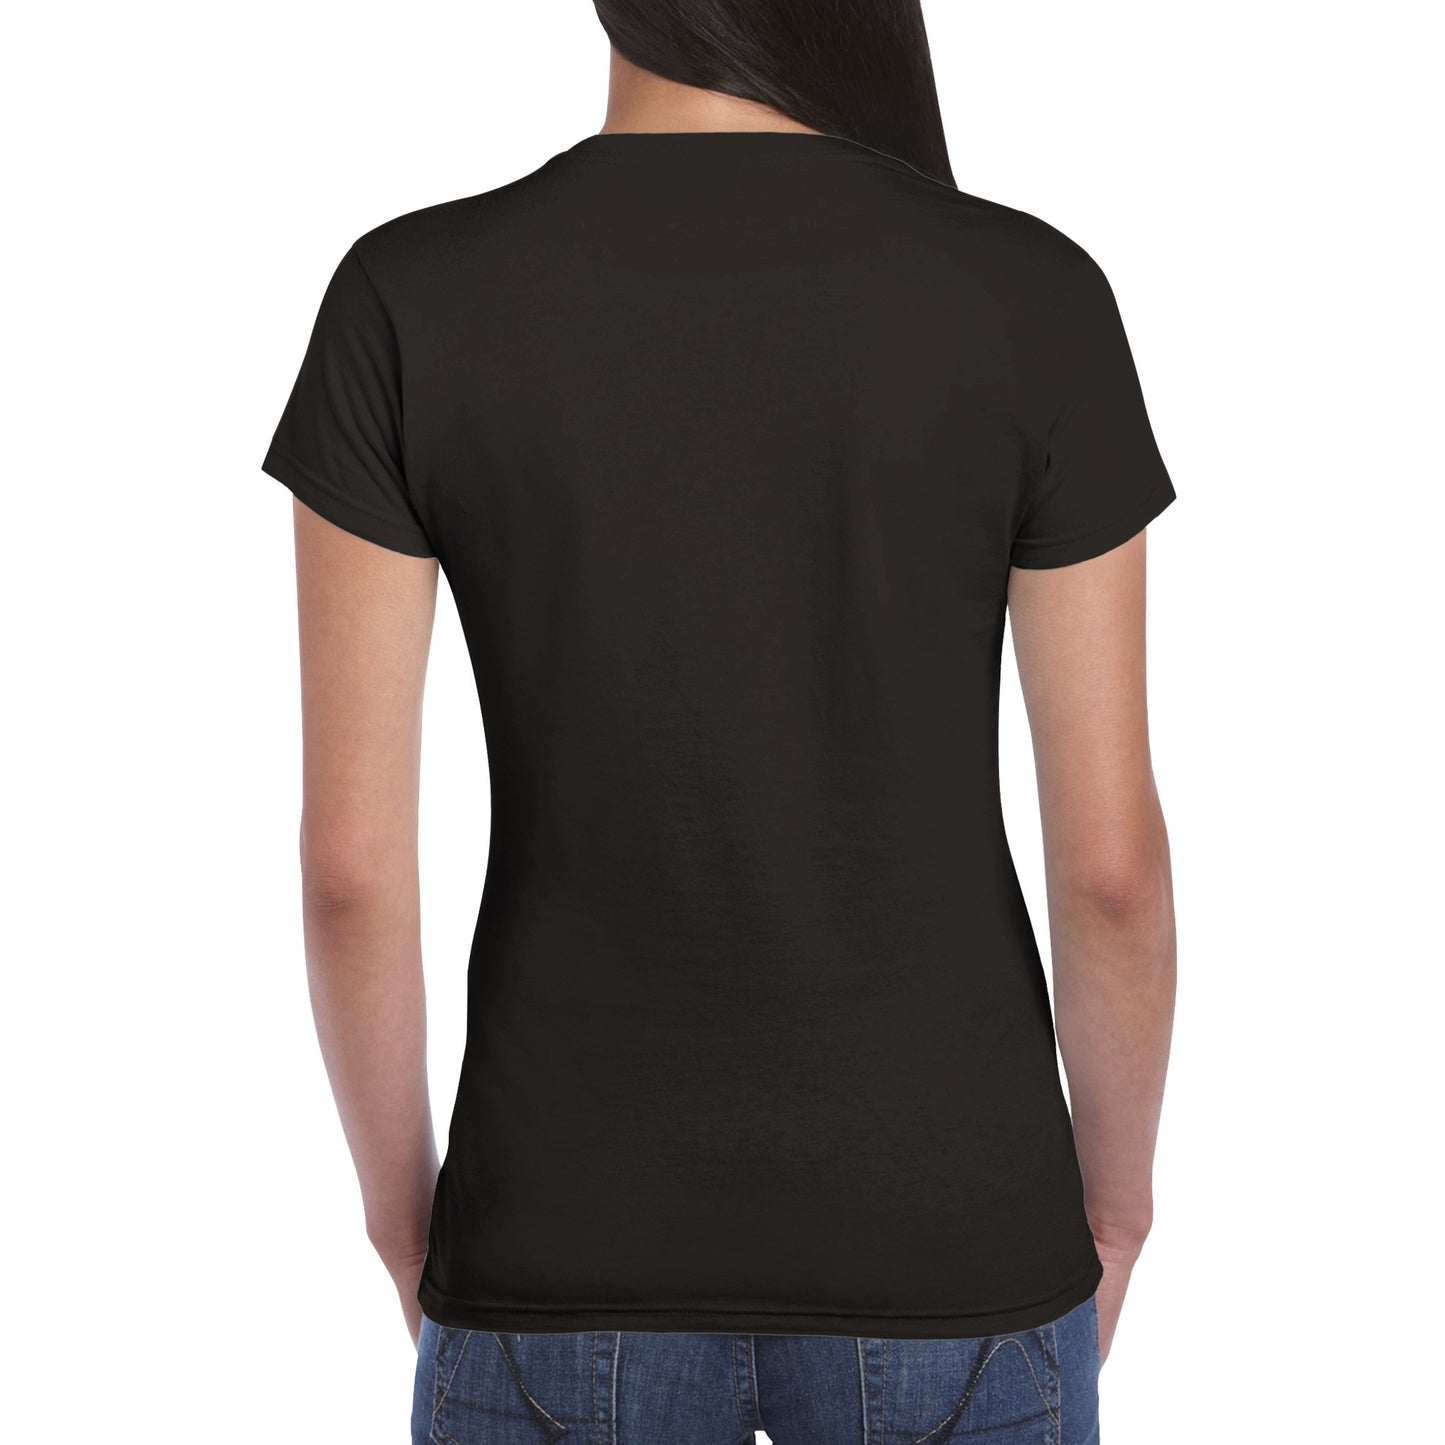 New Zealand Miromiro Tomtit Print Women's Classic Crewneck T-Shirt - Comfortable and Stylish